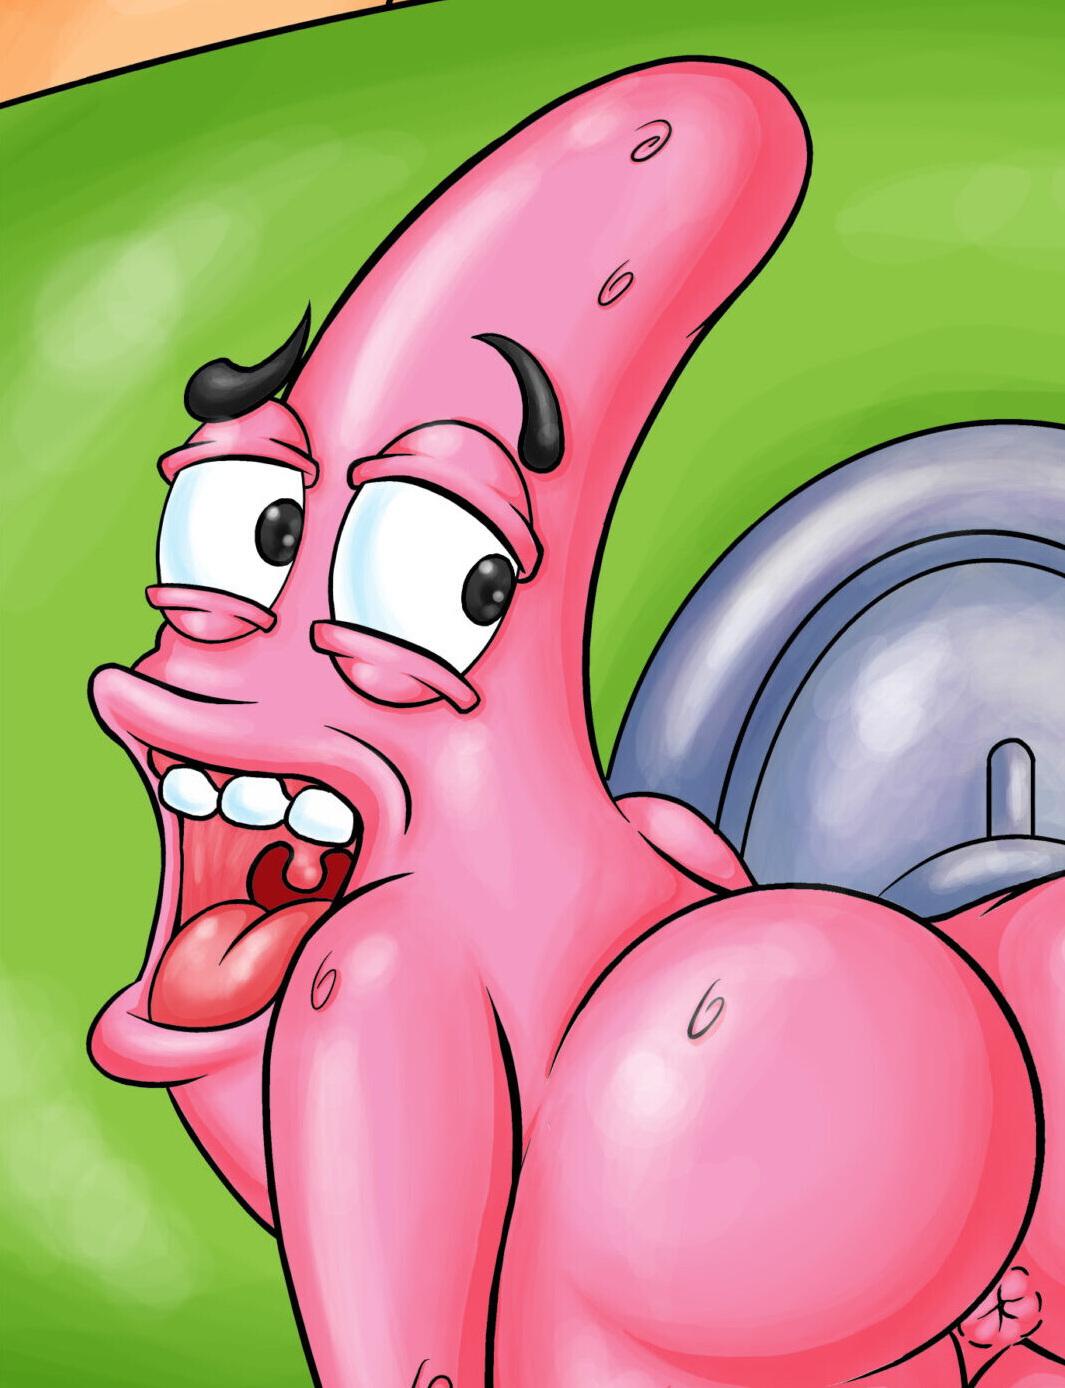 Best of Patrick and spongebob porn